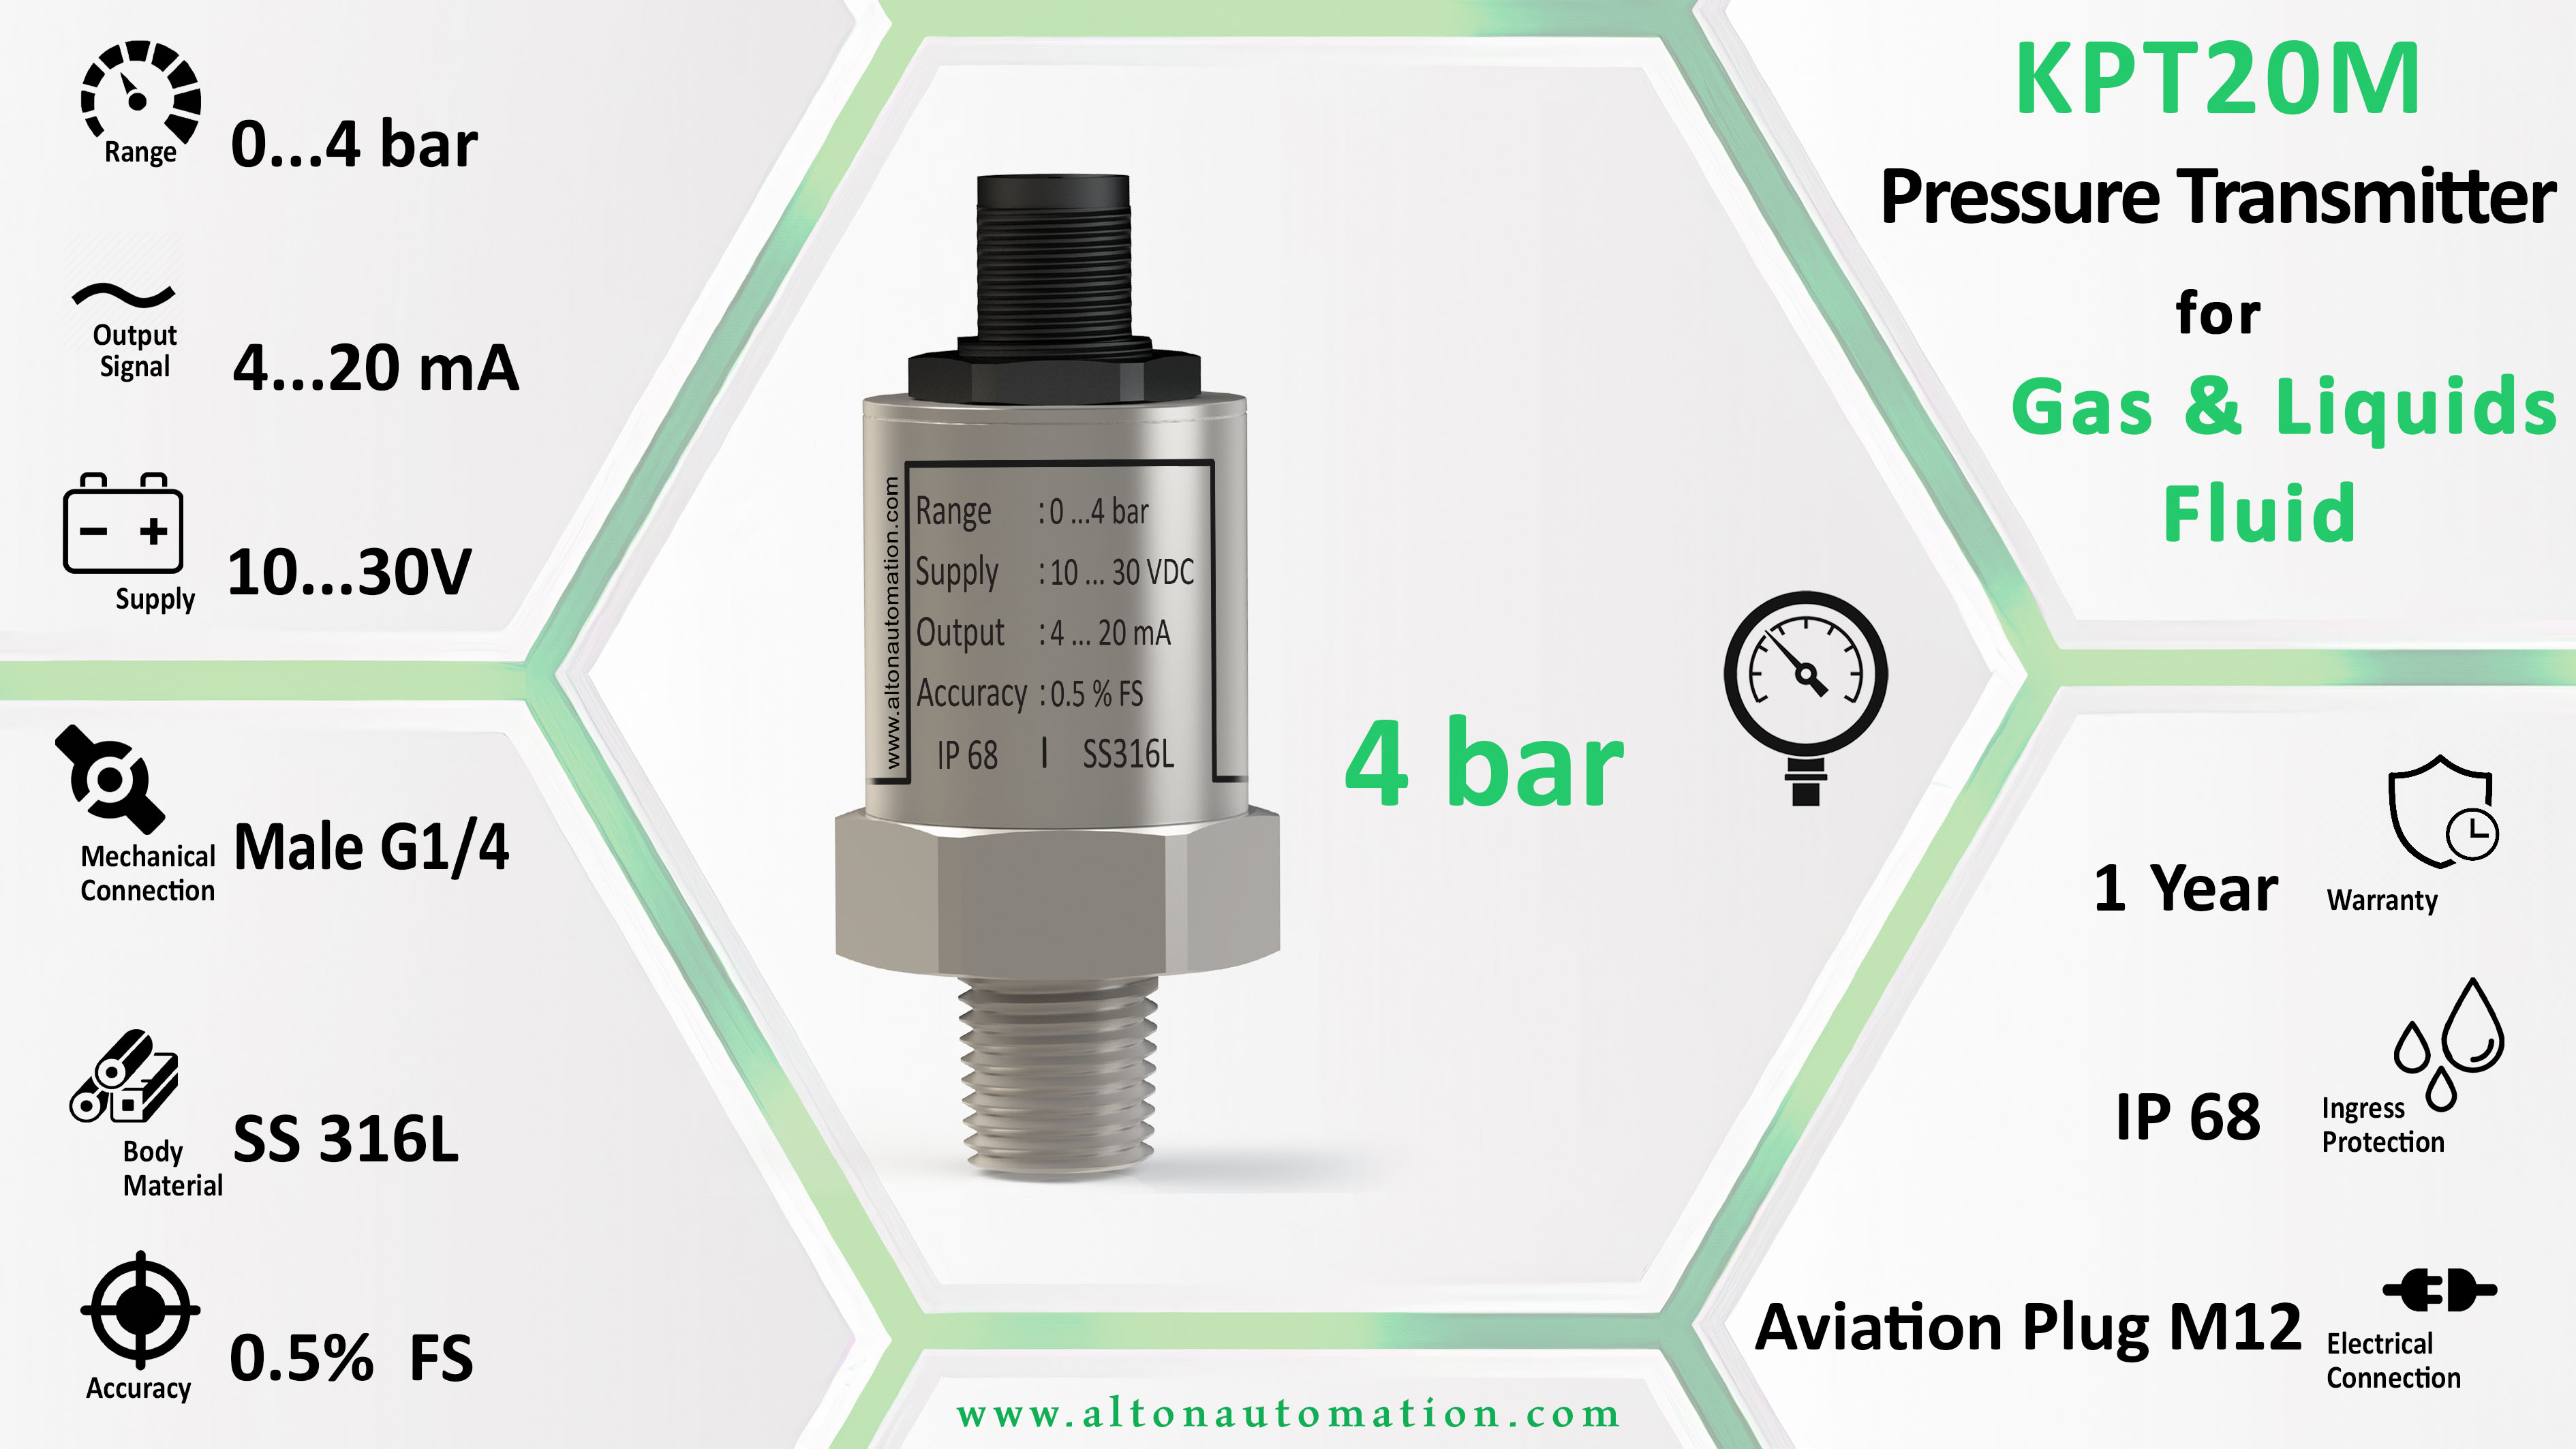 Pressure Transmitter for Gas & Liquids Fluid_KPT20M-004-C1-MG4_image_2